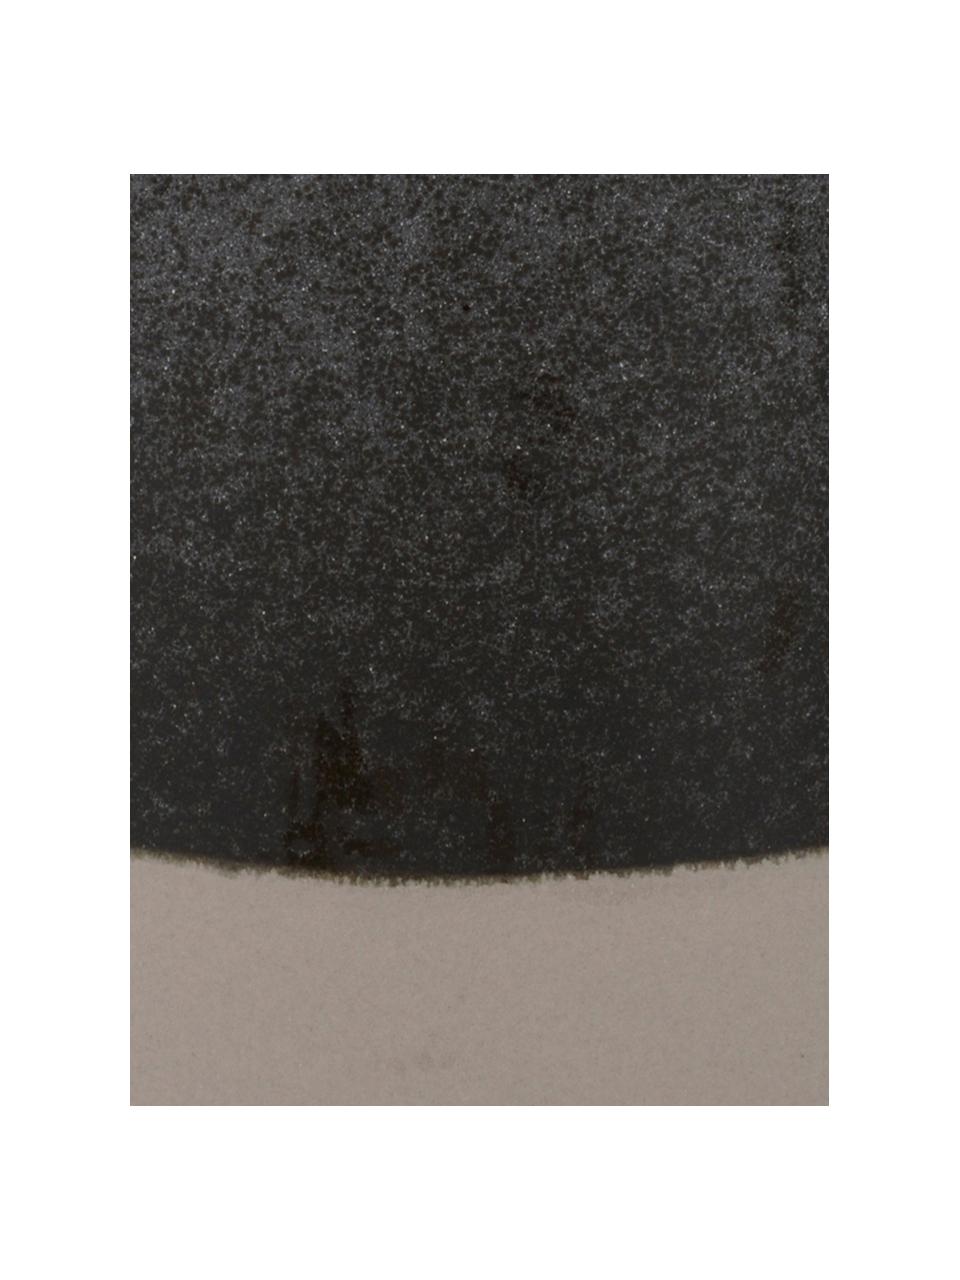 Aufbewahrungsdose Grego, Keramik, Dunkelgrau, Beige, Ø 9 x H 13 cm